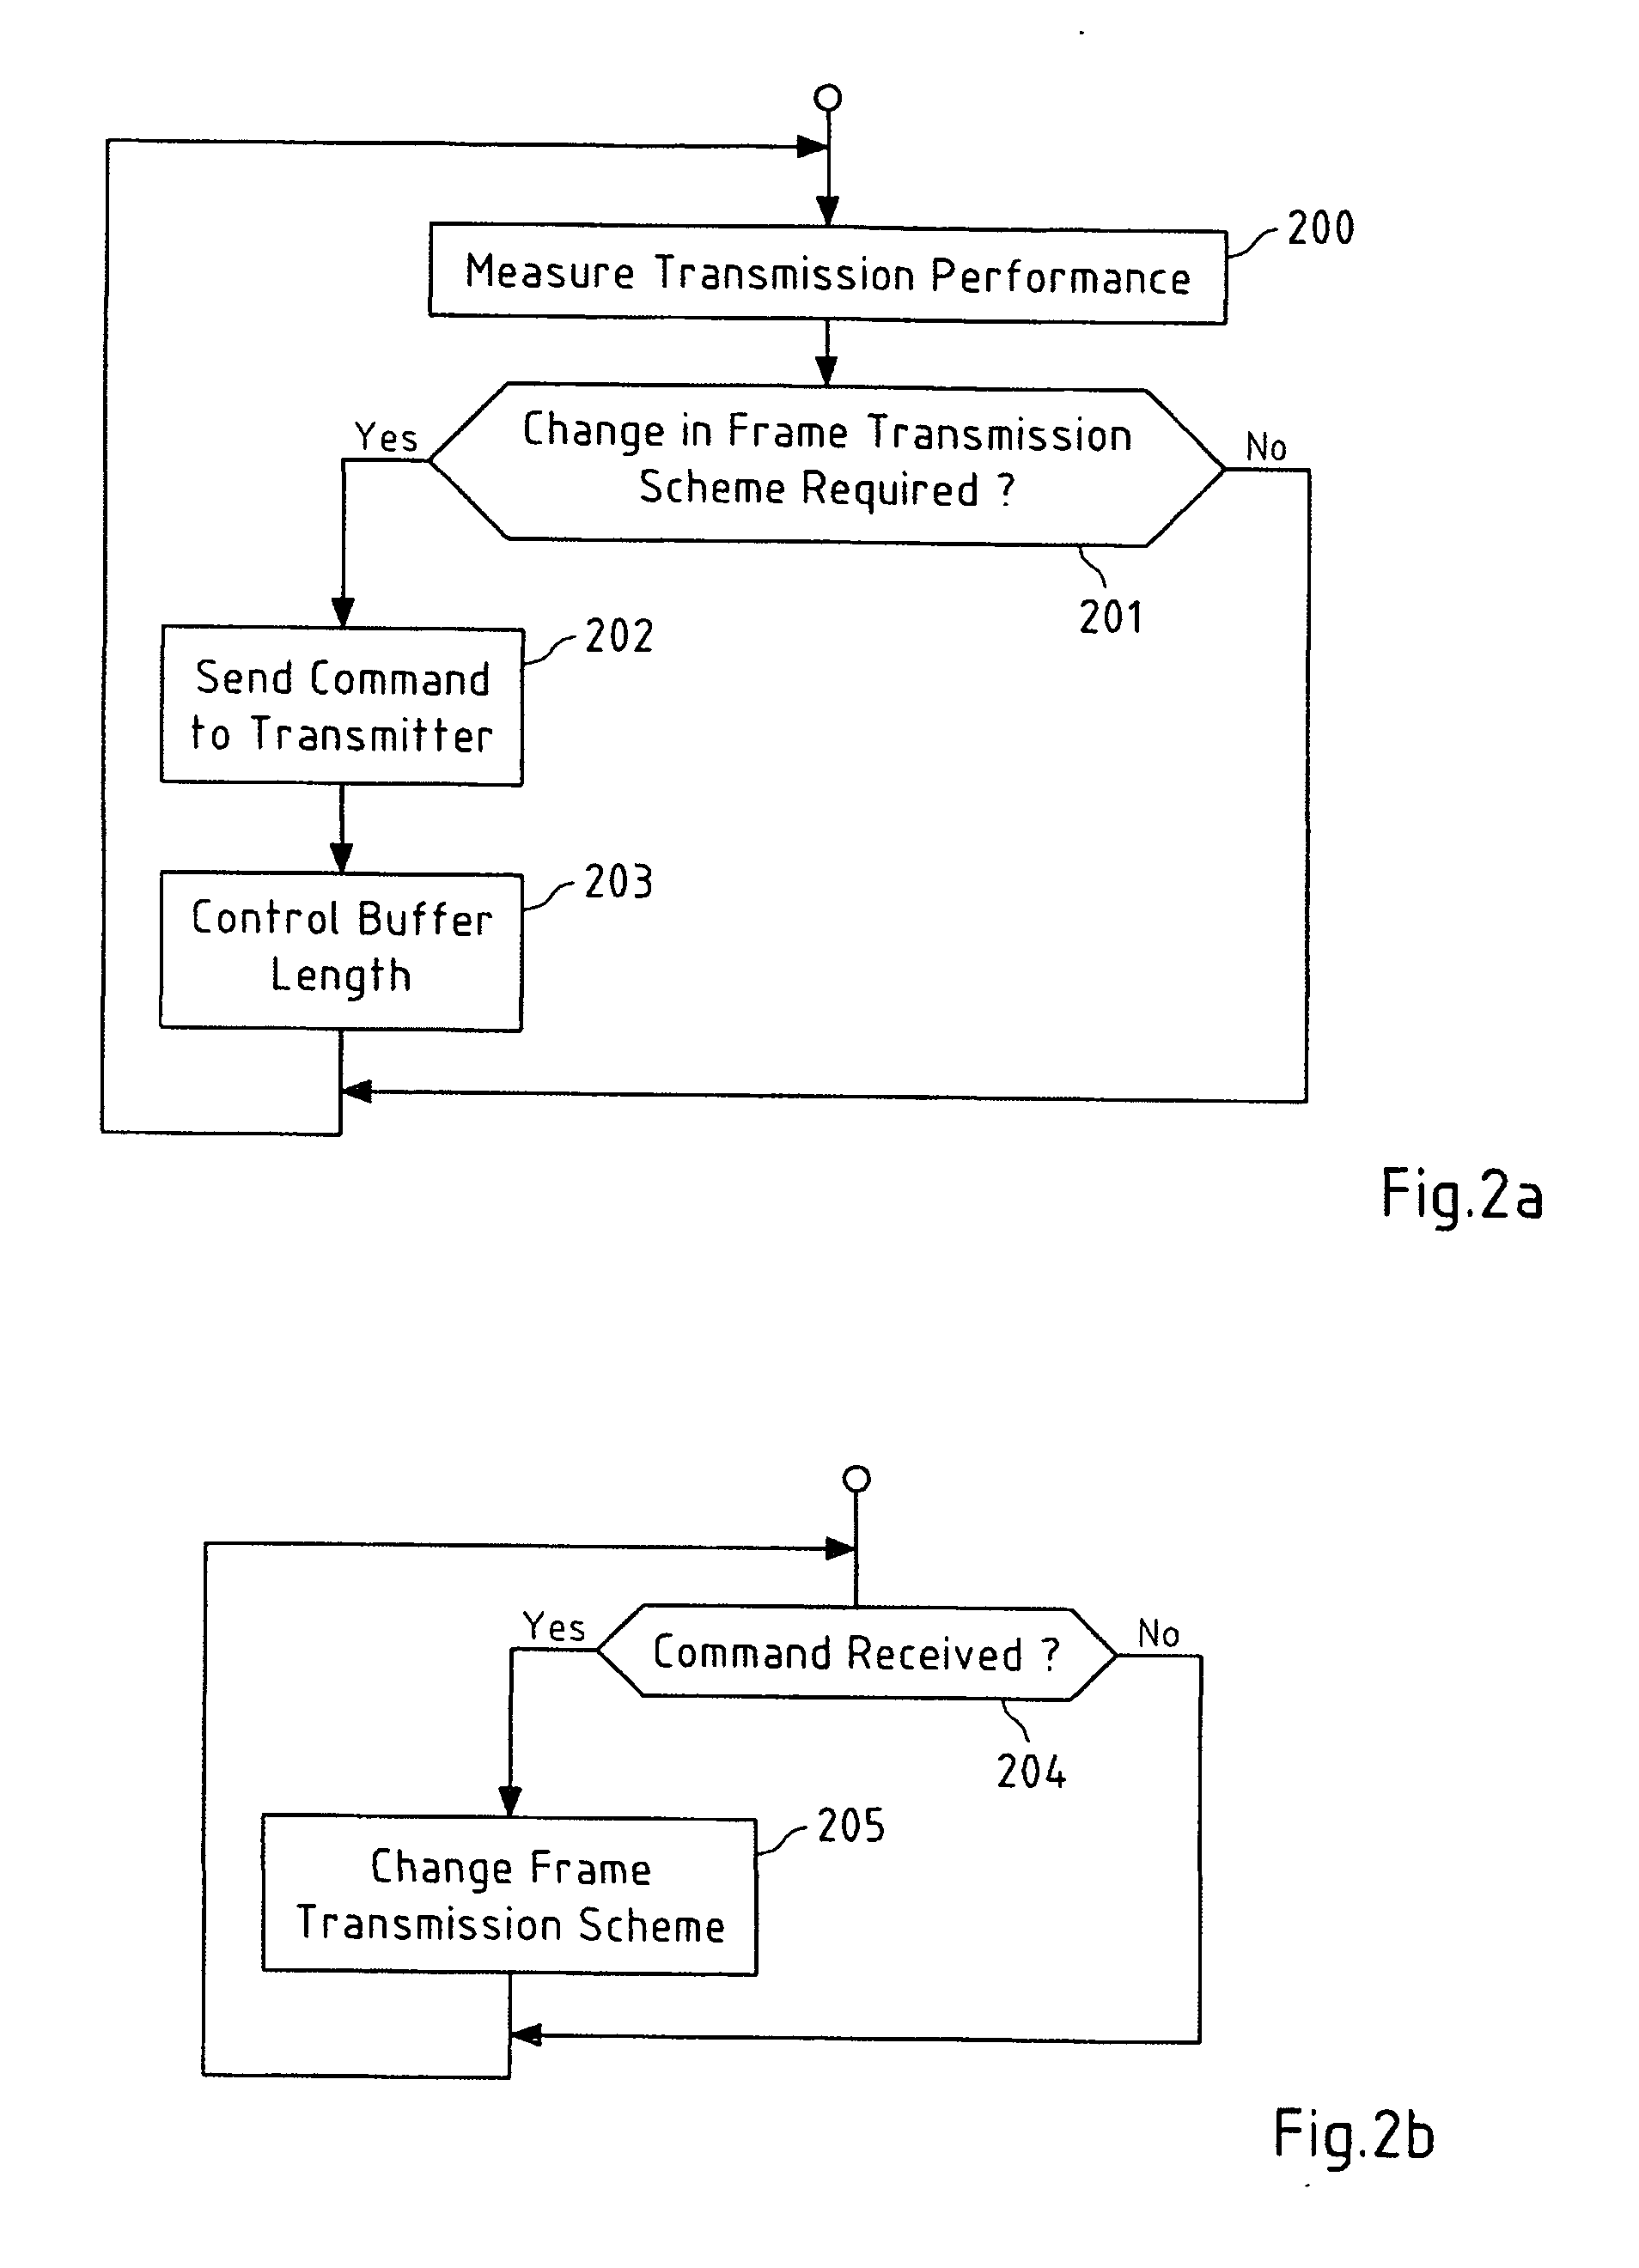 Transmission scheme dependent control of a frame buffer